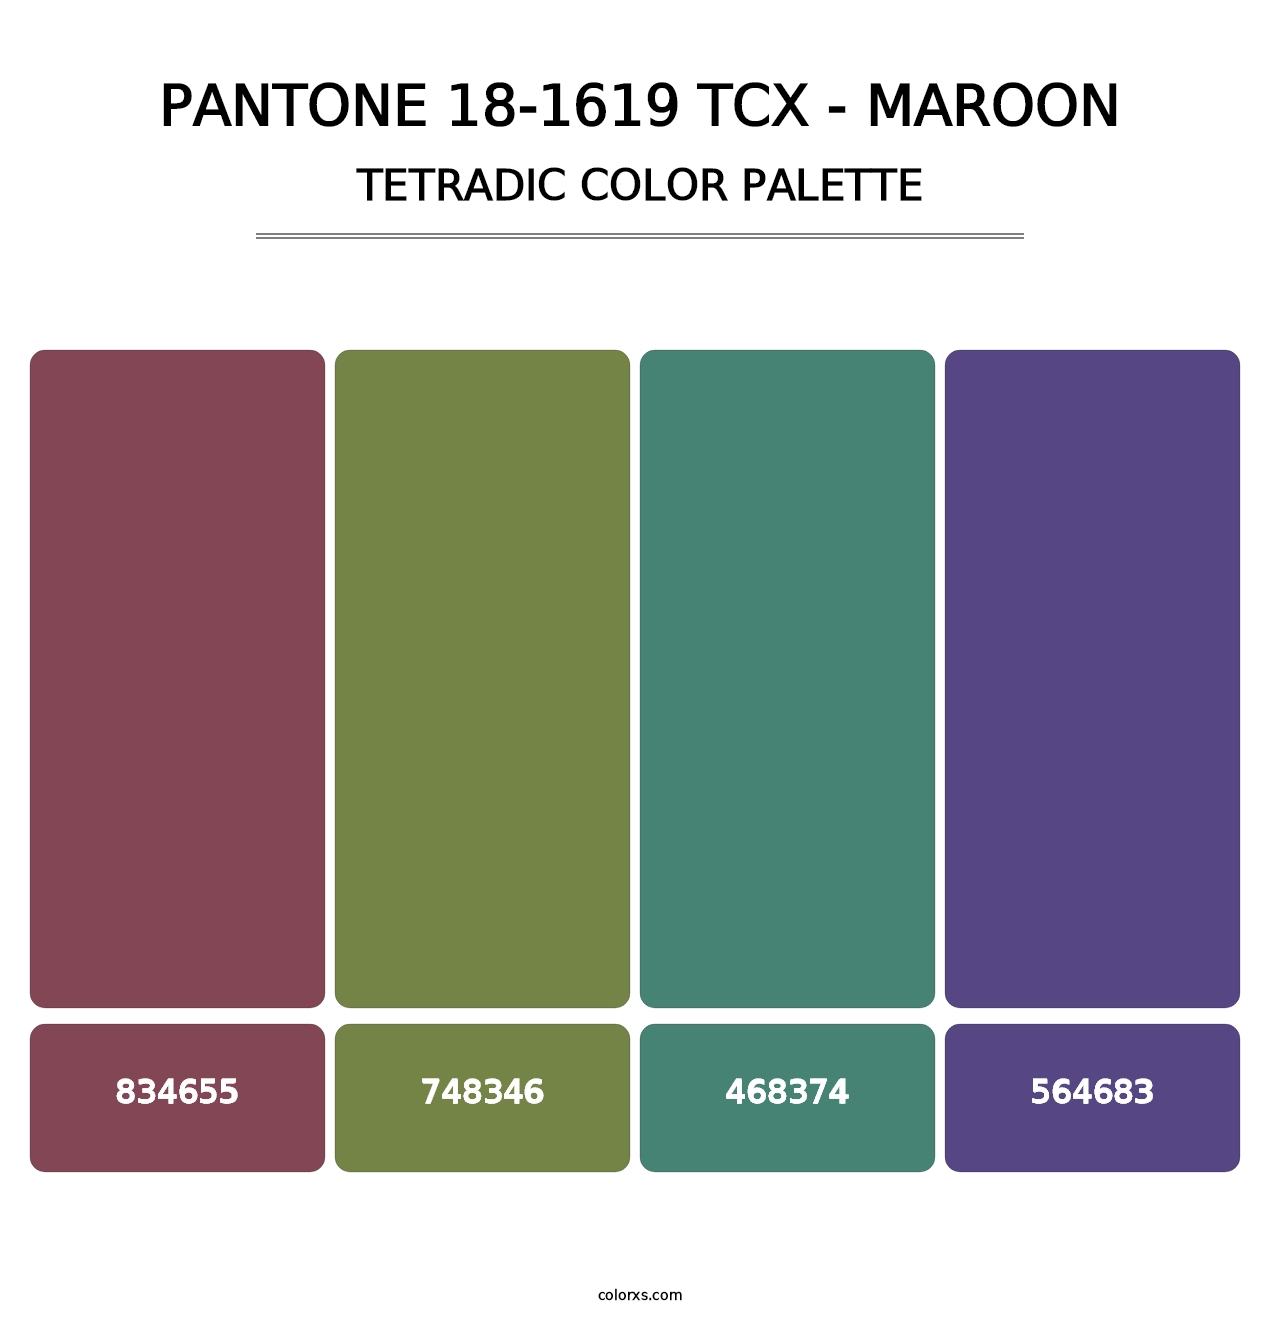 PANTONE 18-1619 TCX - Maroon - Tetradic Color Palette